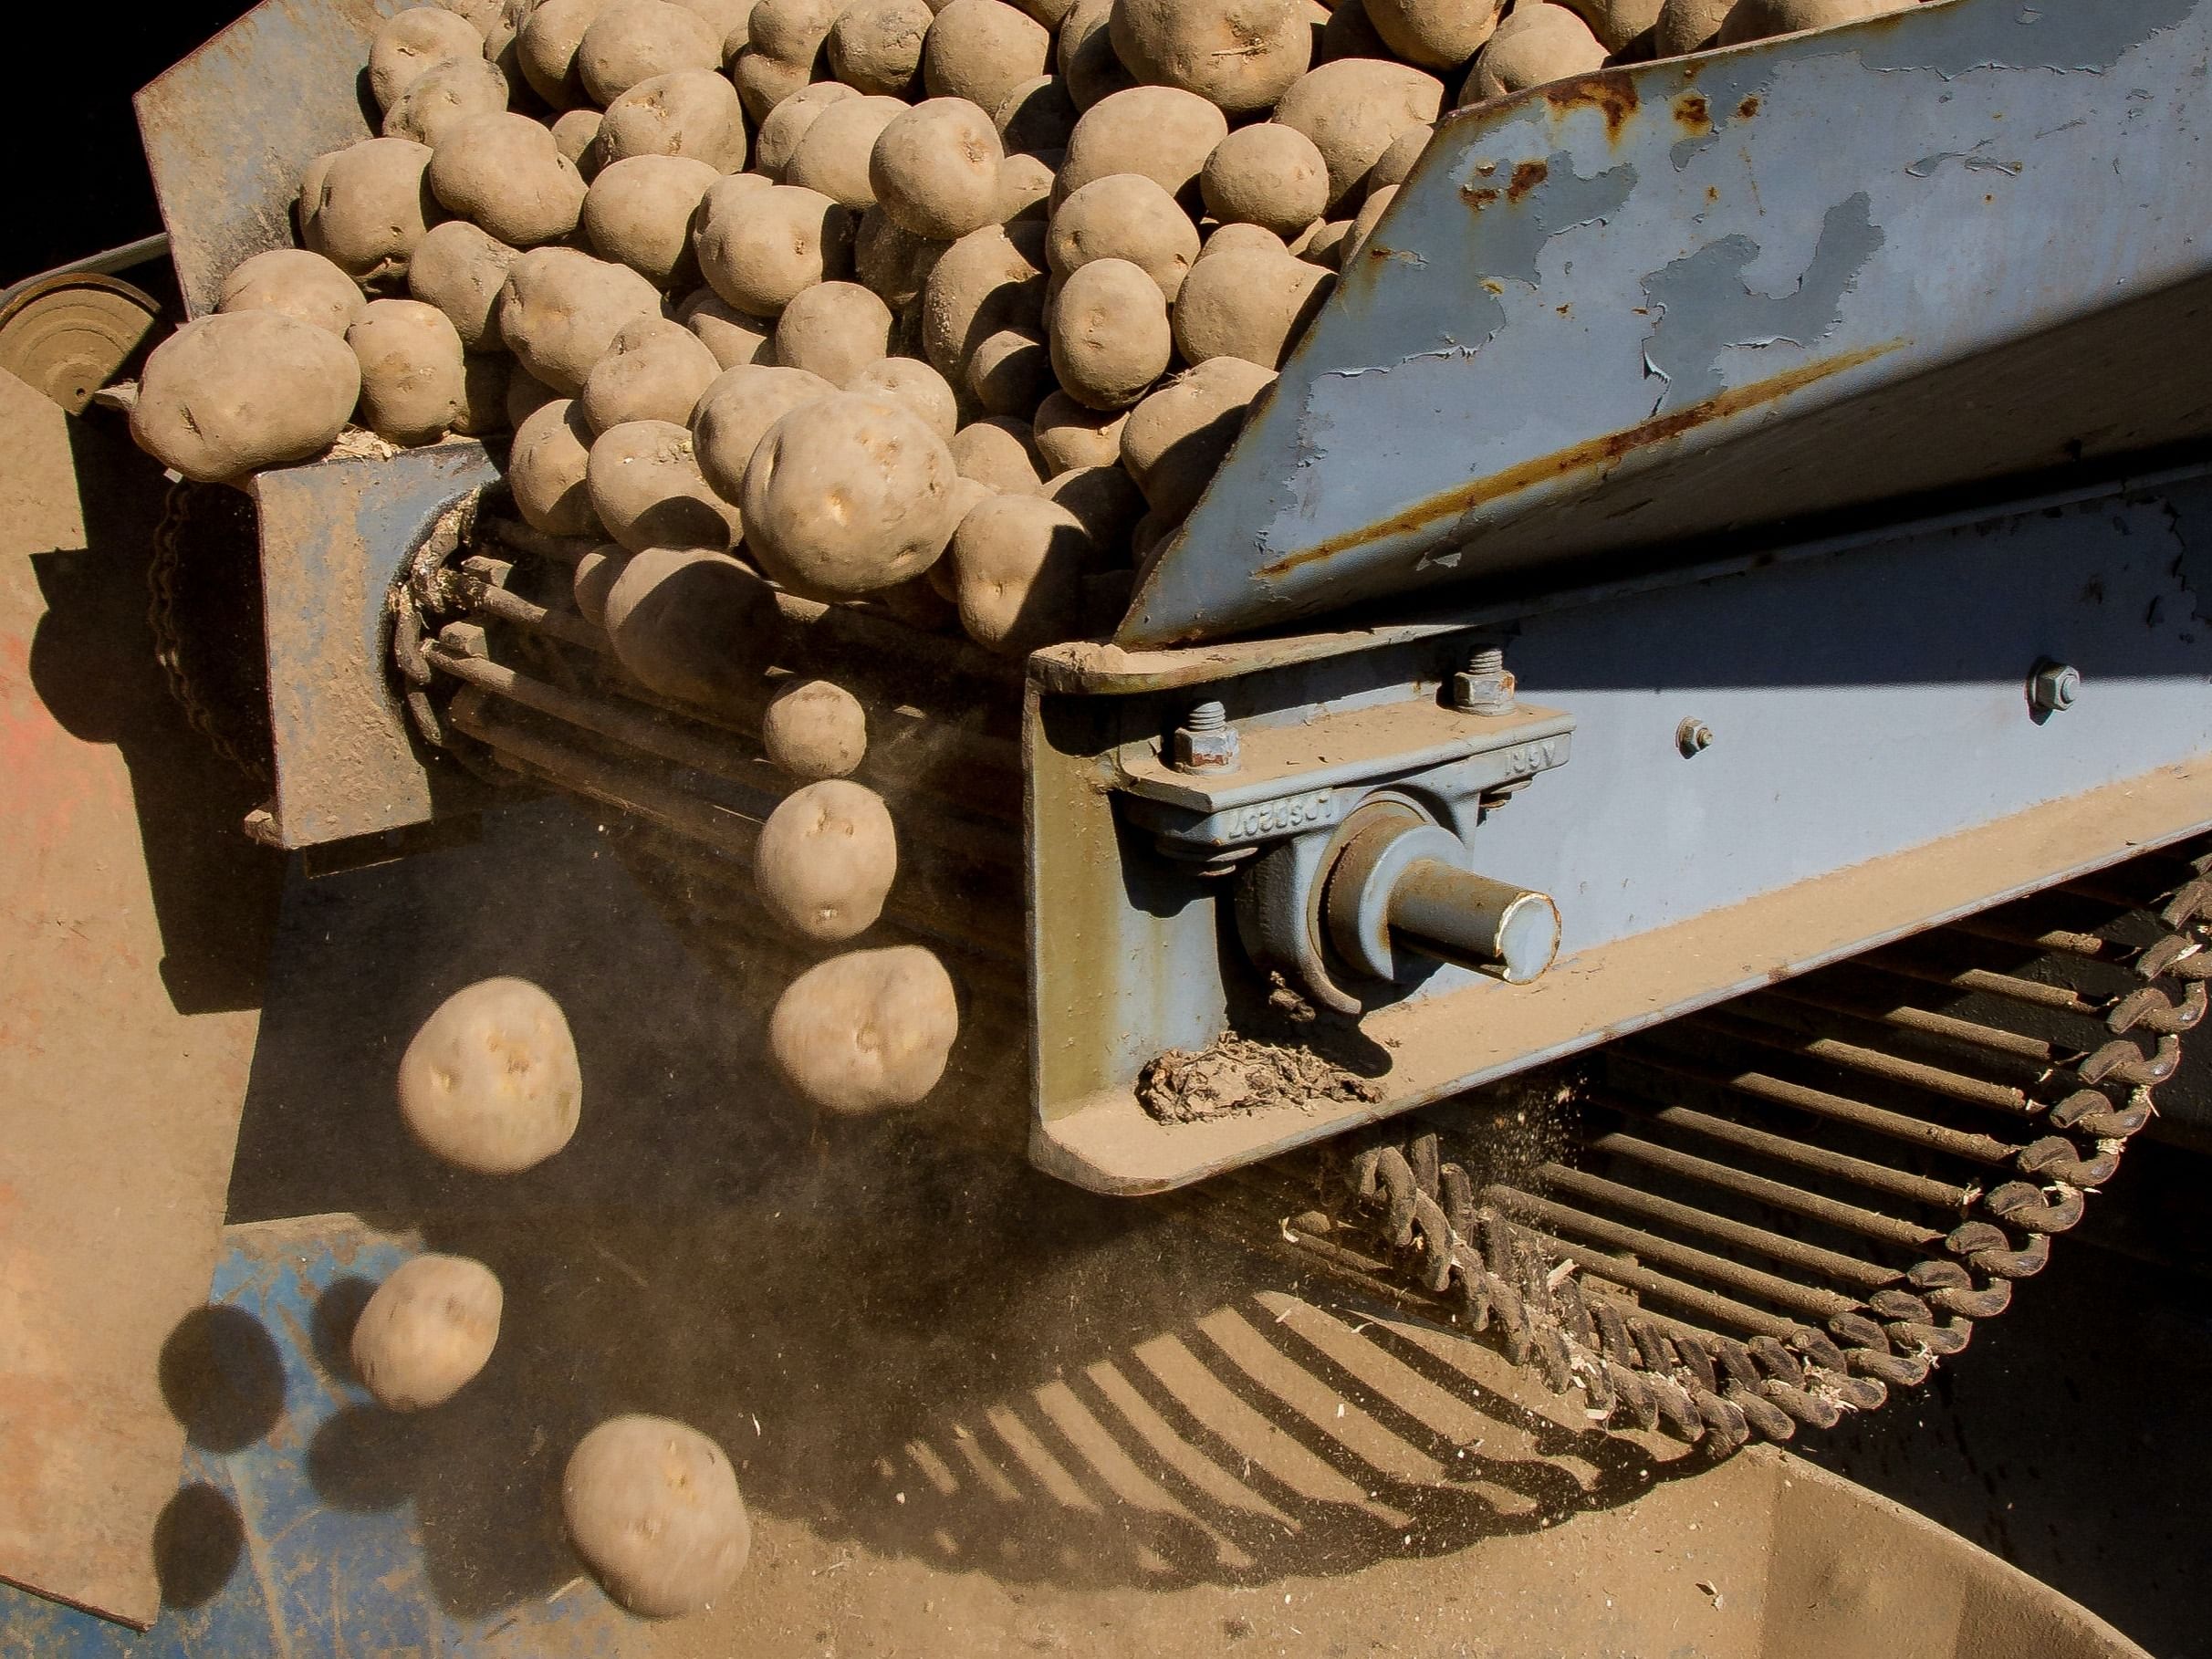 Potatoes: The Journey of Potatoes (Image via Pexels)